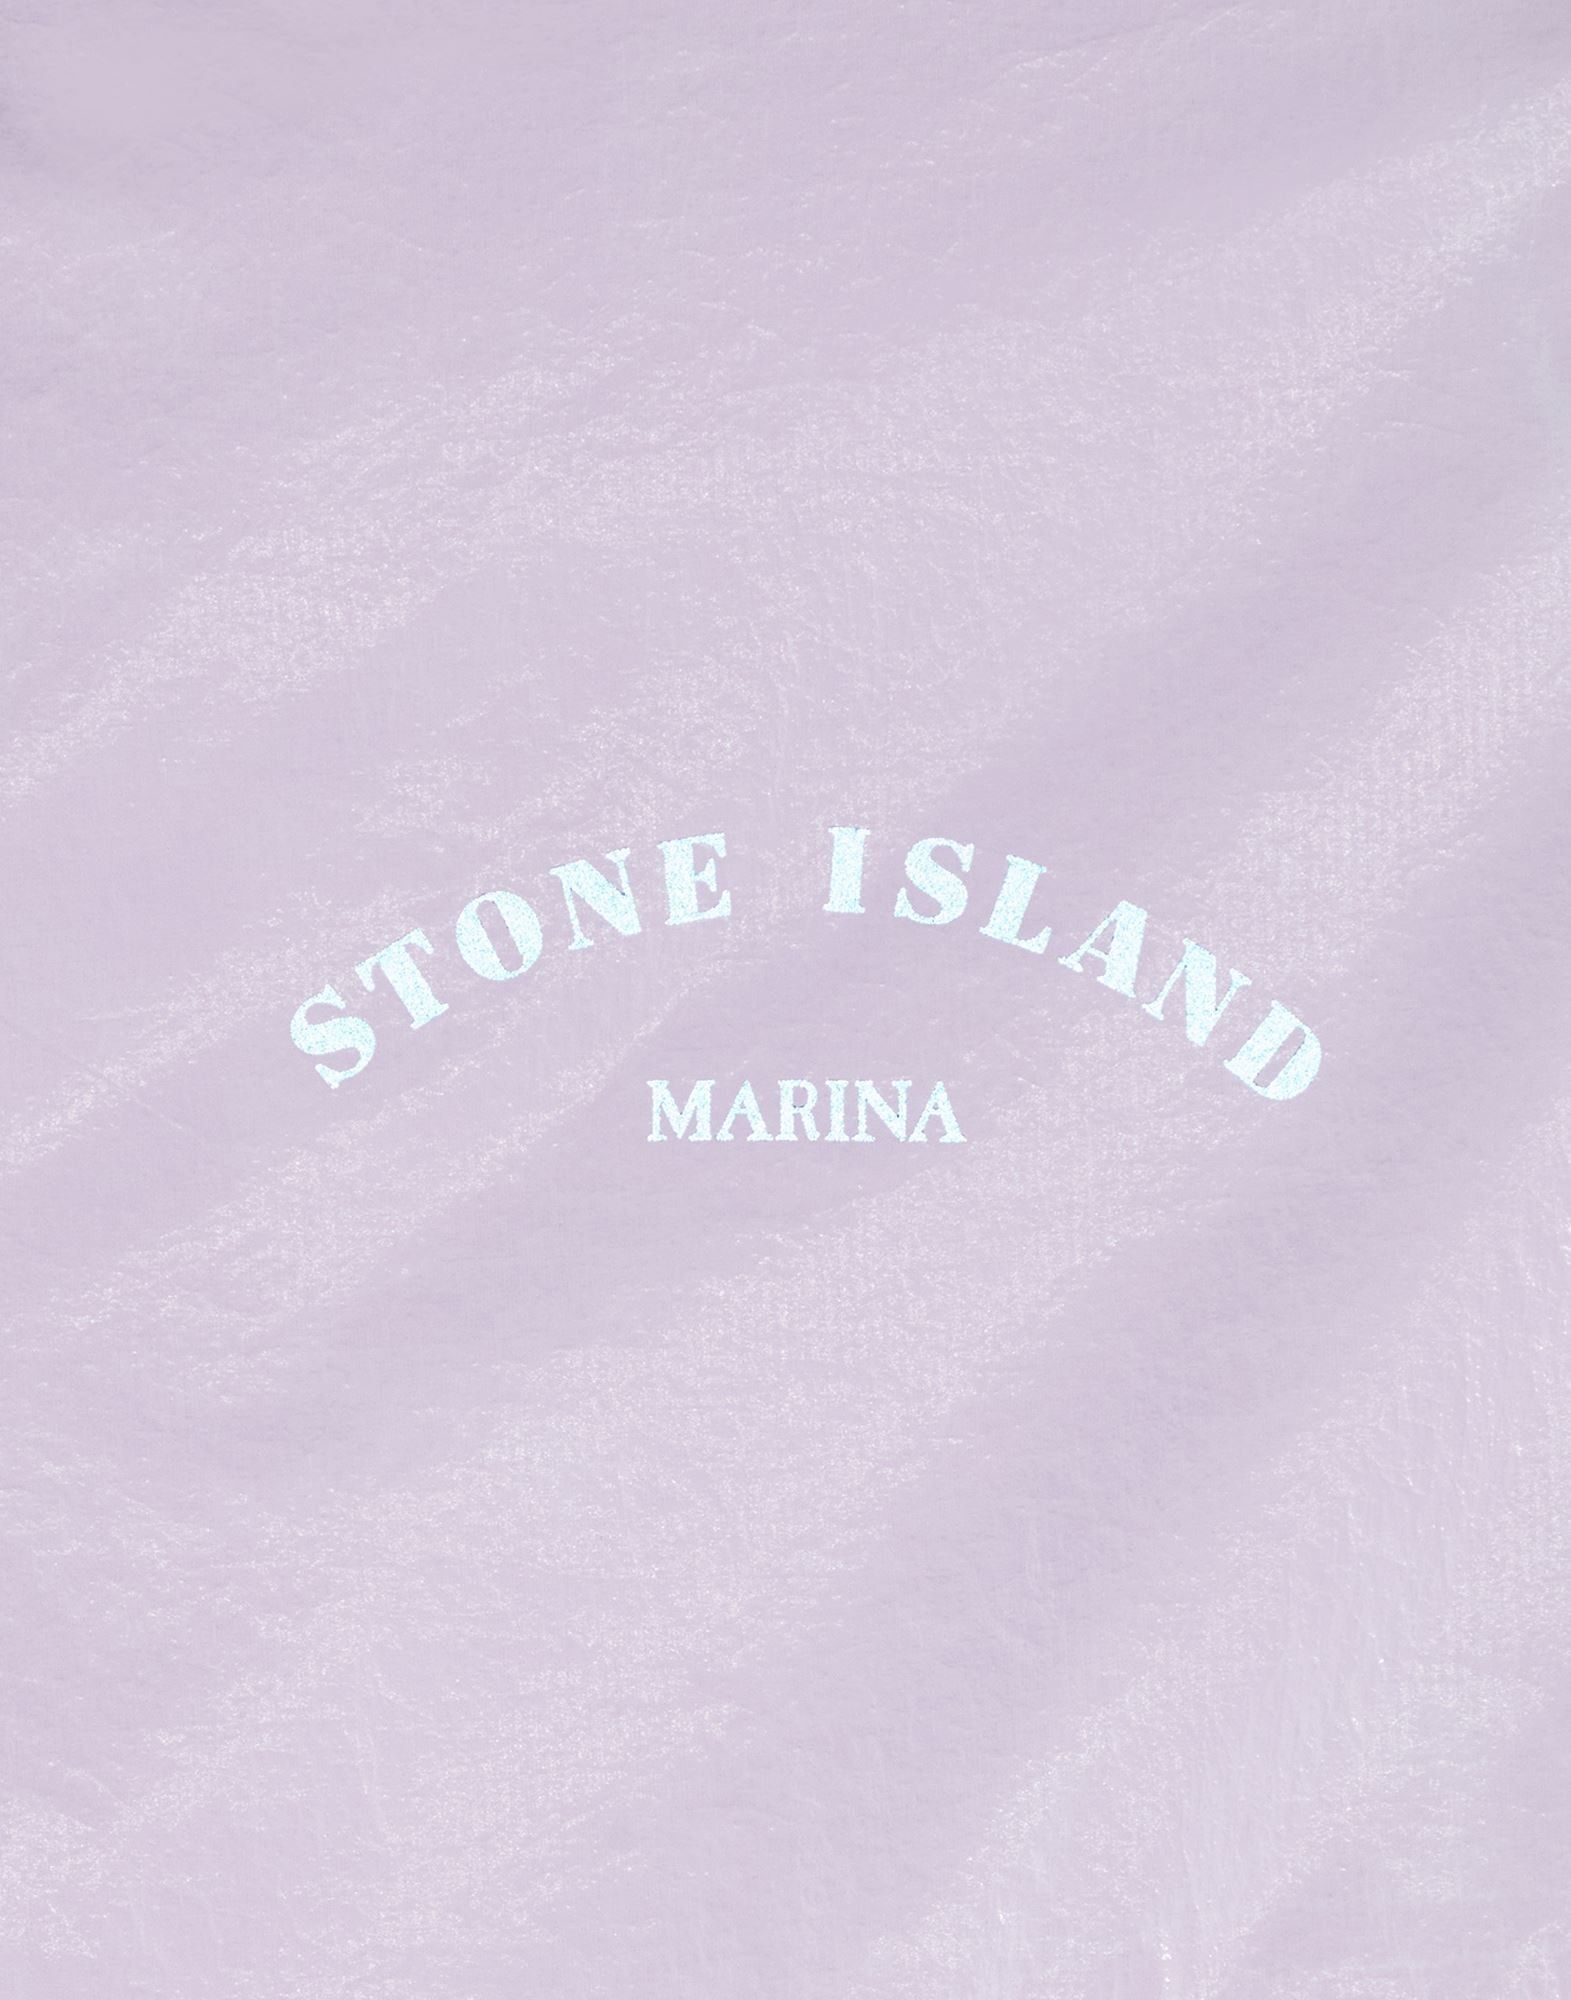  Stone Island Hintergrundbild 1571x2000. Куртка Stone Island Marina Rip Stop